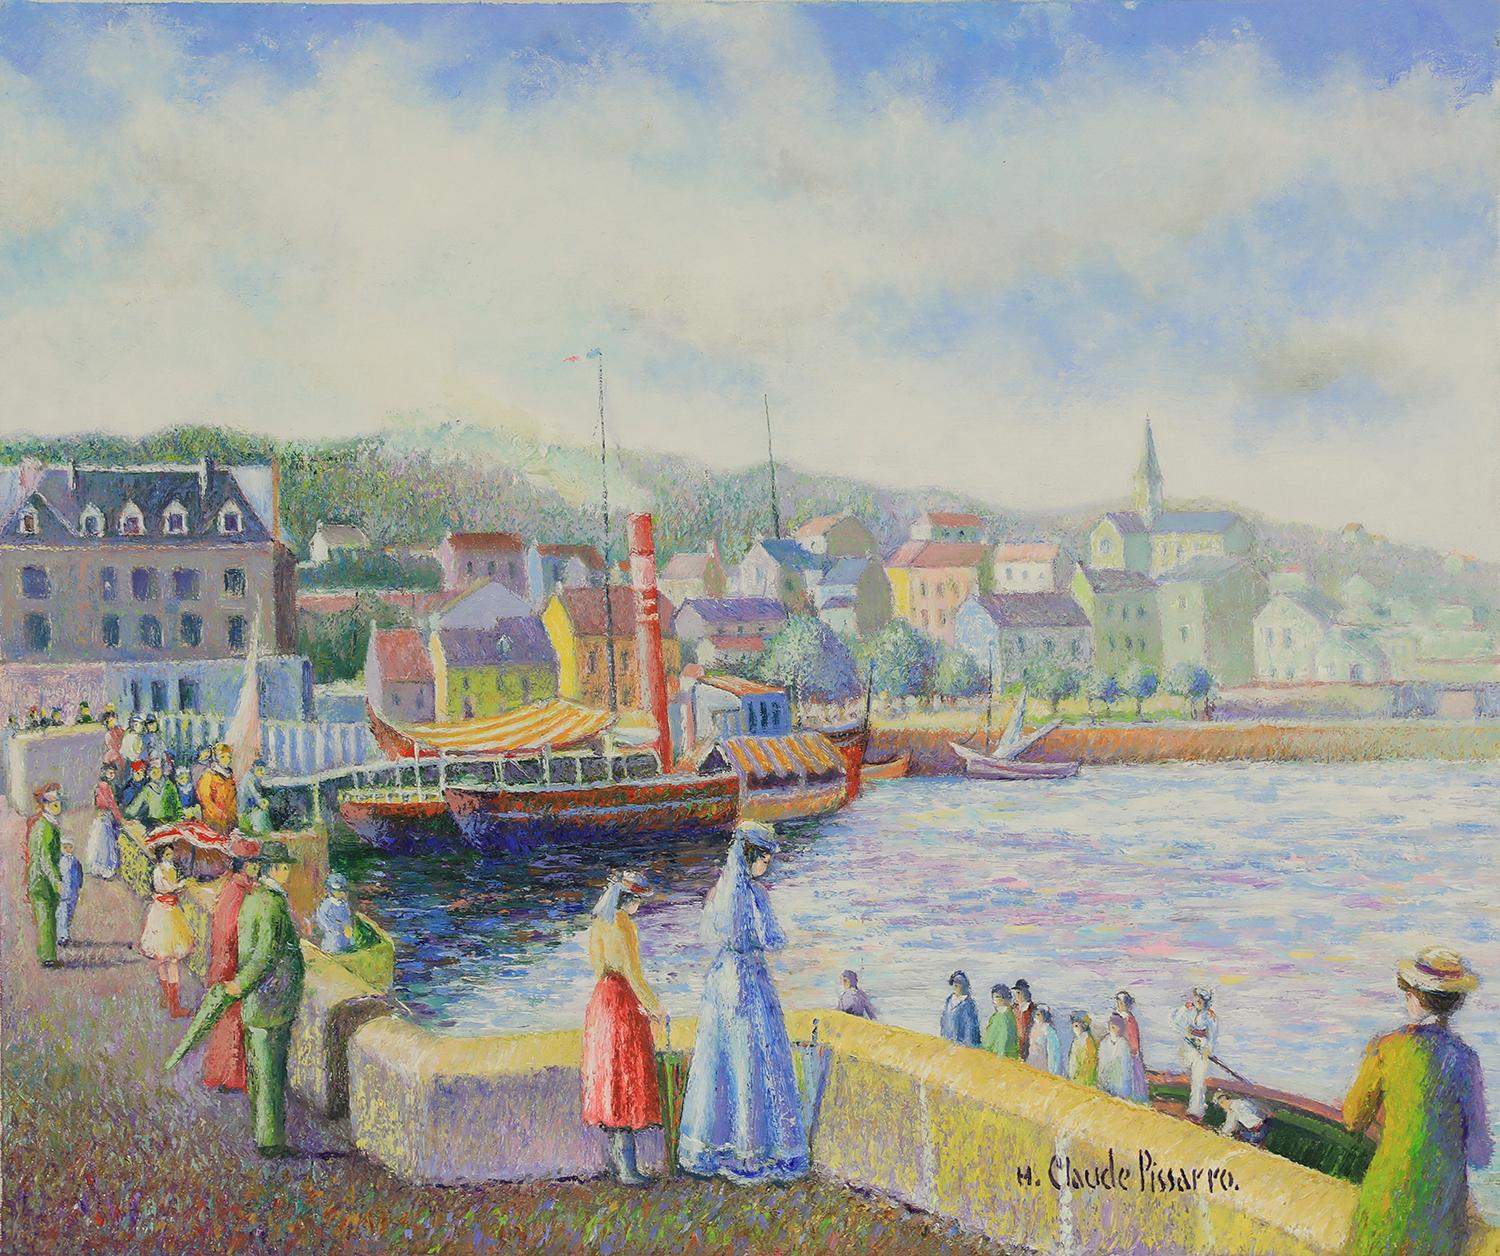 Hughes Claude Pissarro Figurative Painting - Embarquement pour le Havre by H. Claude Pissarro - Post-Impressionist style